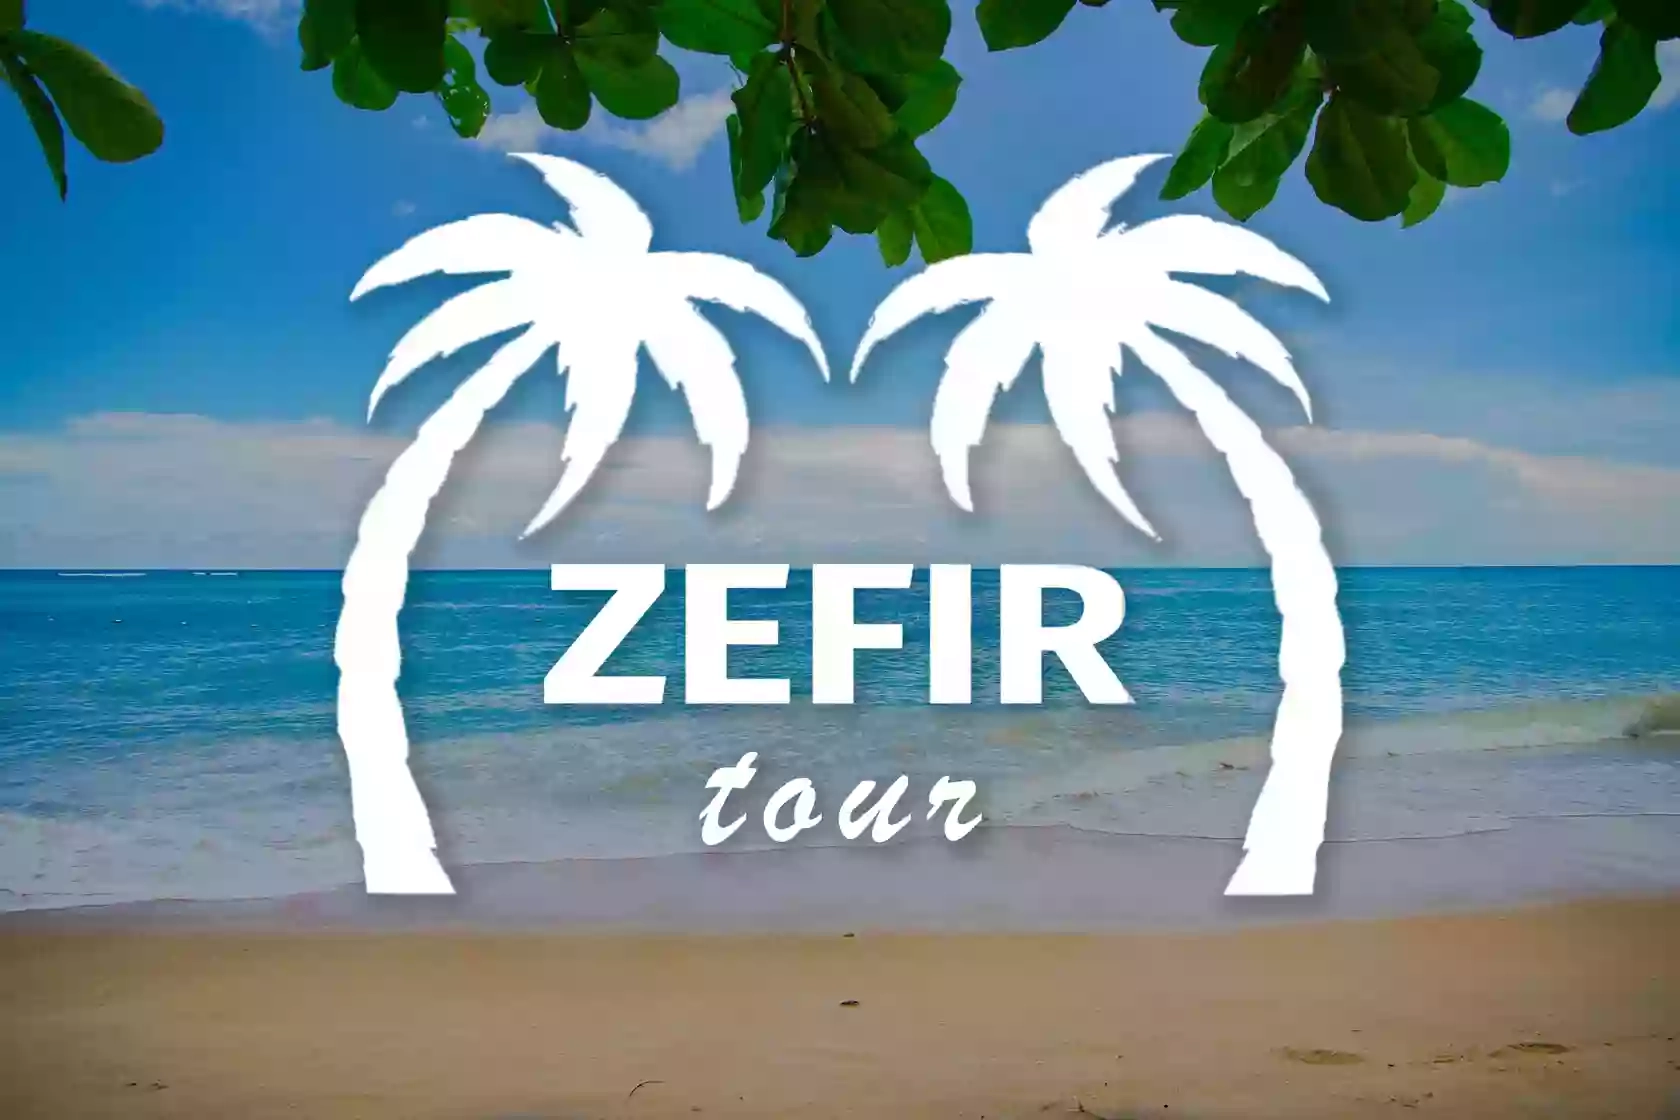 Zefir Tour